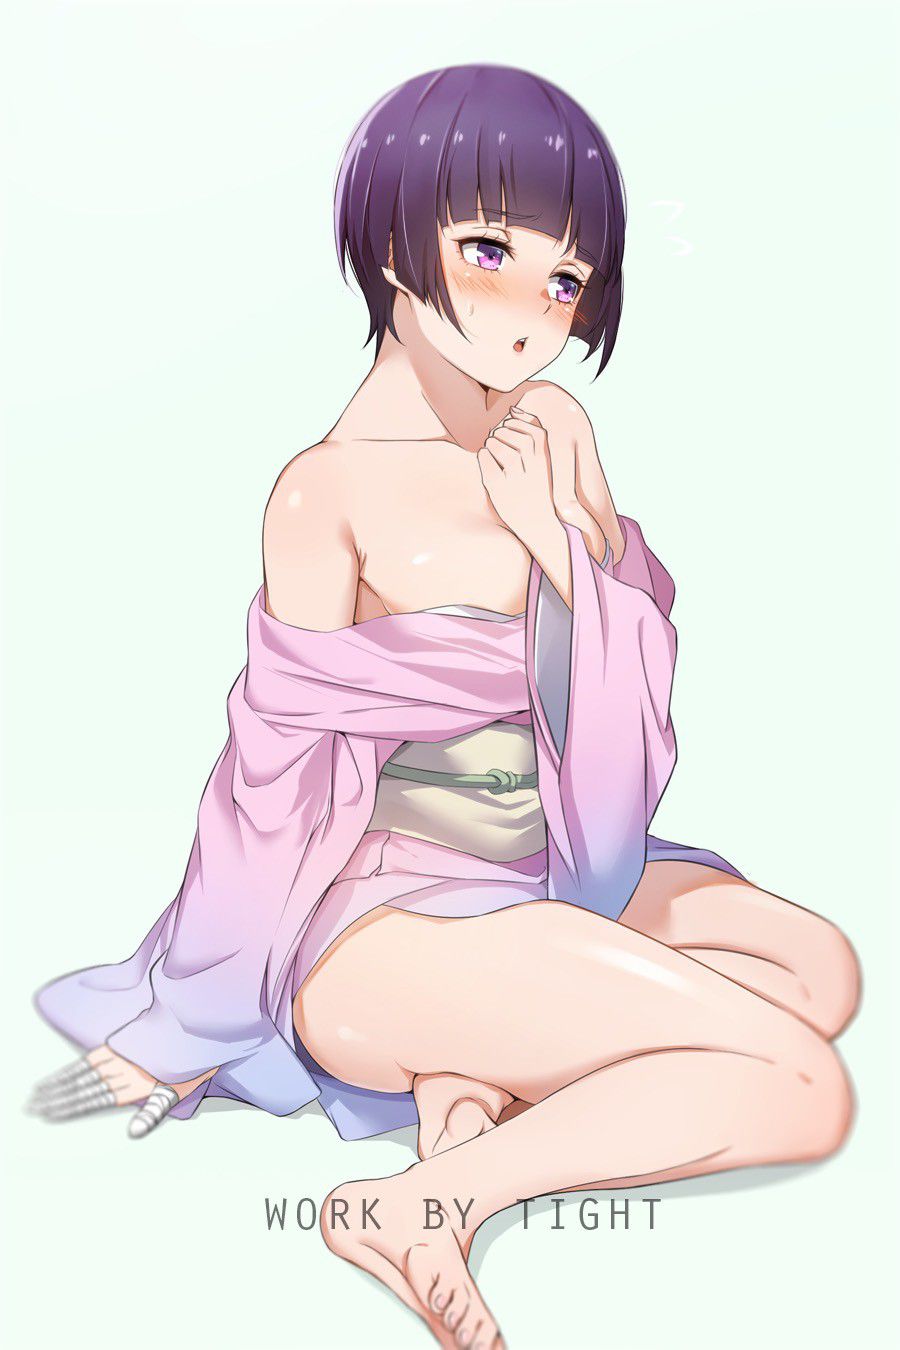 [2nd] The disturbed kimono figure is erotic erotic girl secondary erotic image part 18 [Kimono] 22